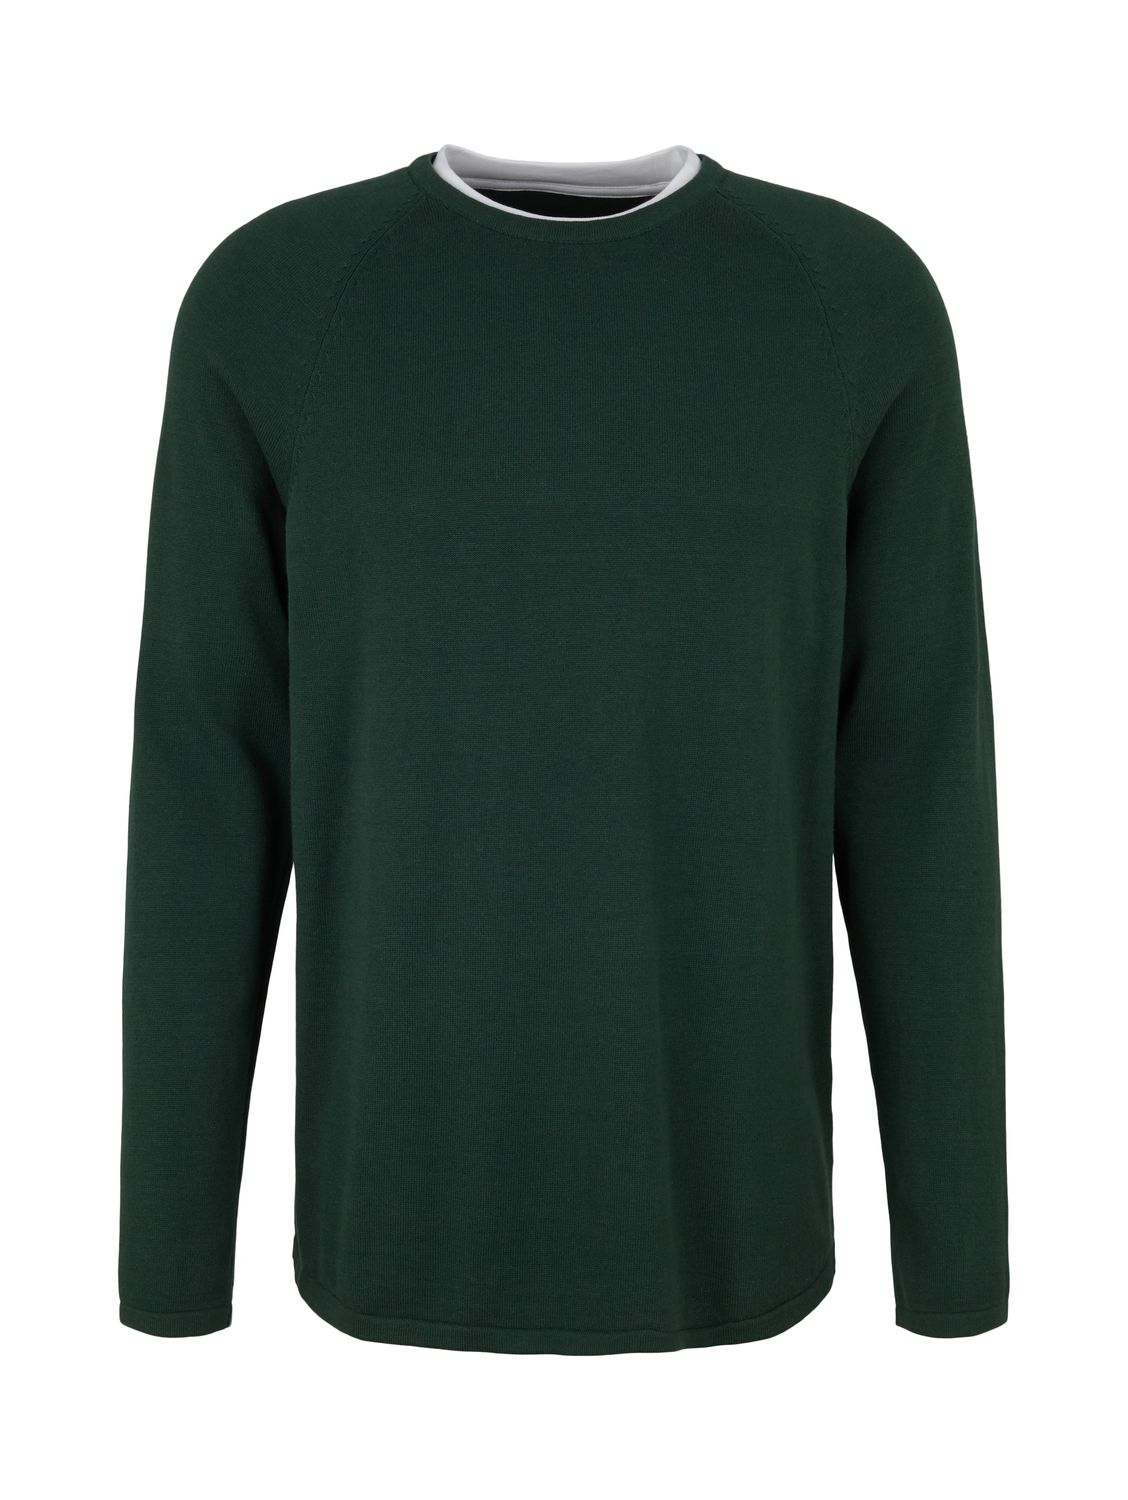 Пуловер TOM TAILOR Denim BASIC, зеленый пуловер tom tailor tom tailor strick зеленый